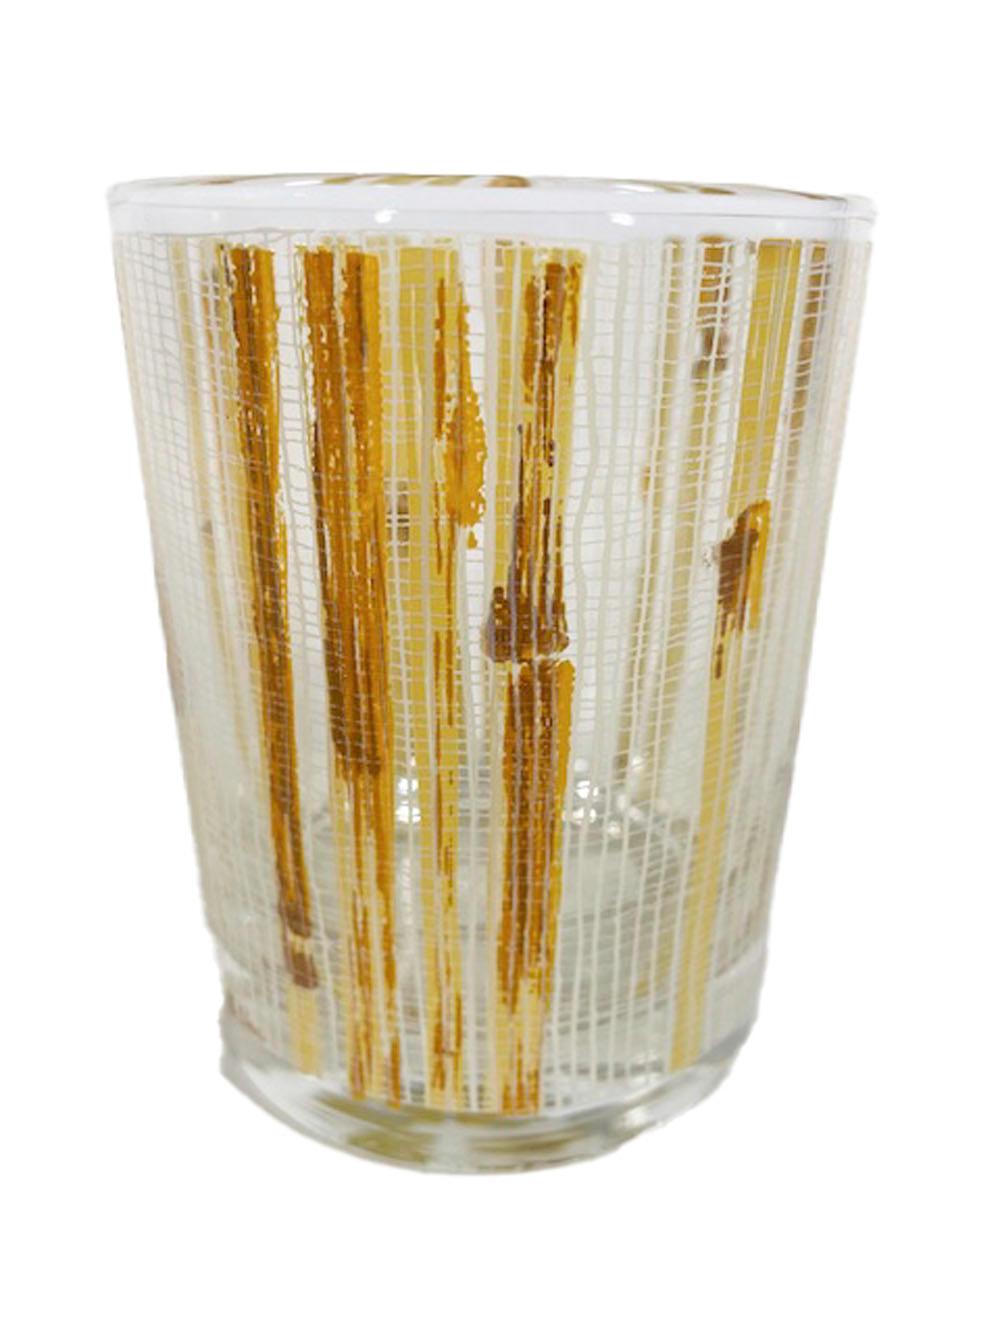 Vintage Cera Glassware for Neiman-Marcus Rocks Glasses in a Bamboo Design 1